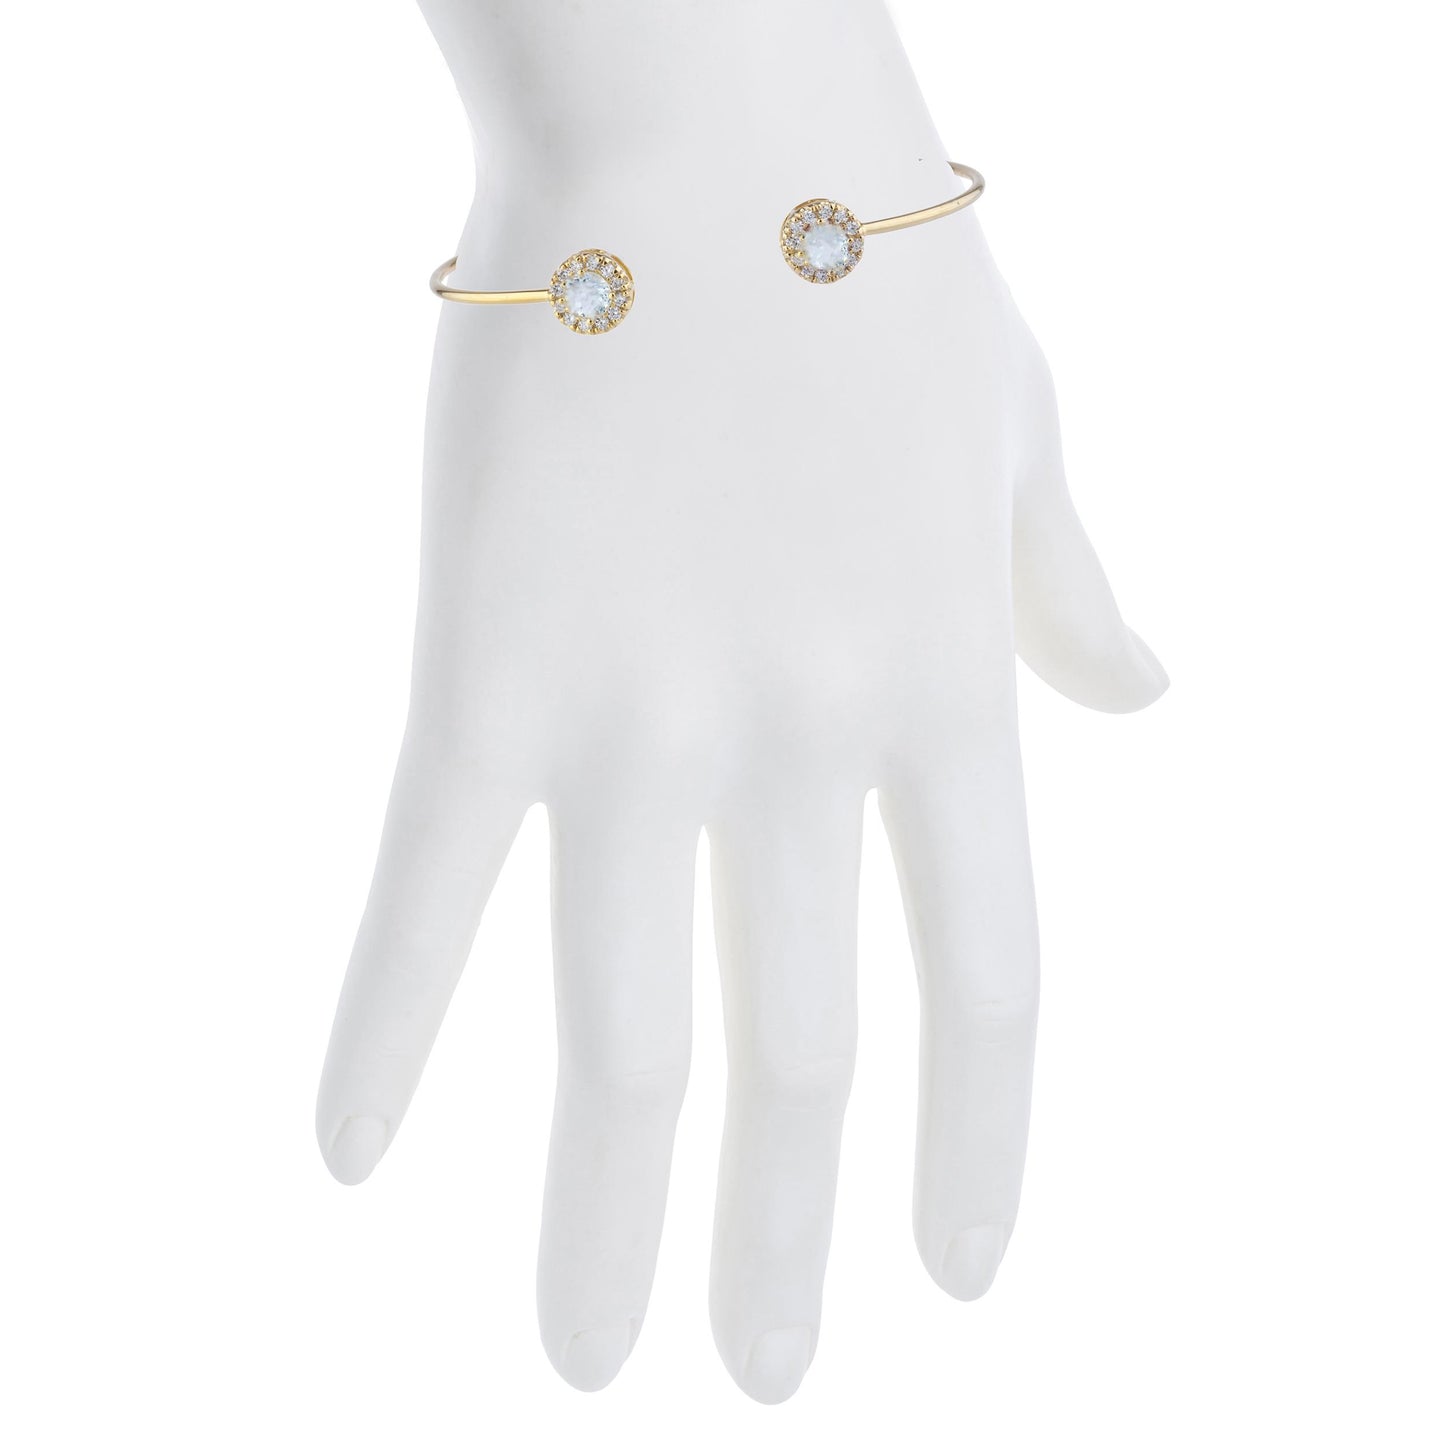 1 Ct Aquamarine Halo Design Round Bangle Bracelet 14Kt Yellow Gold Rose Gold Silver